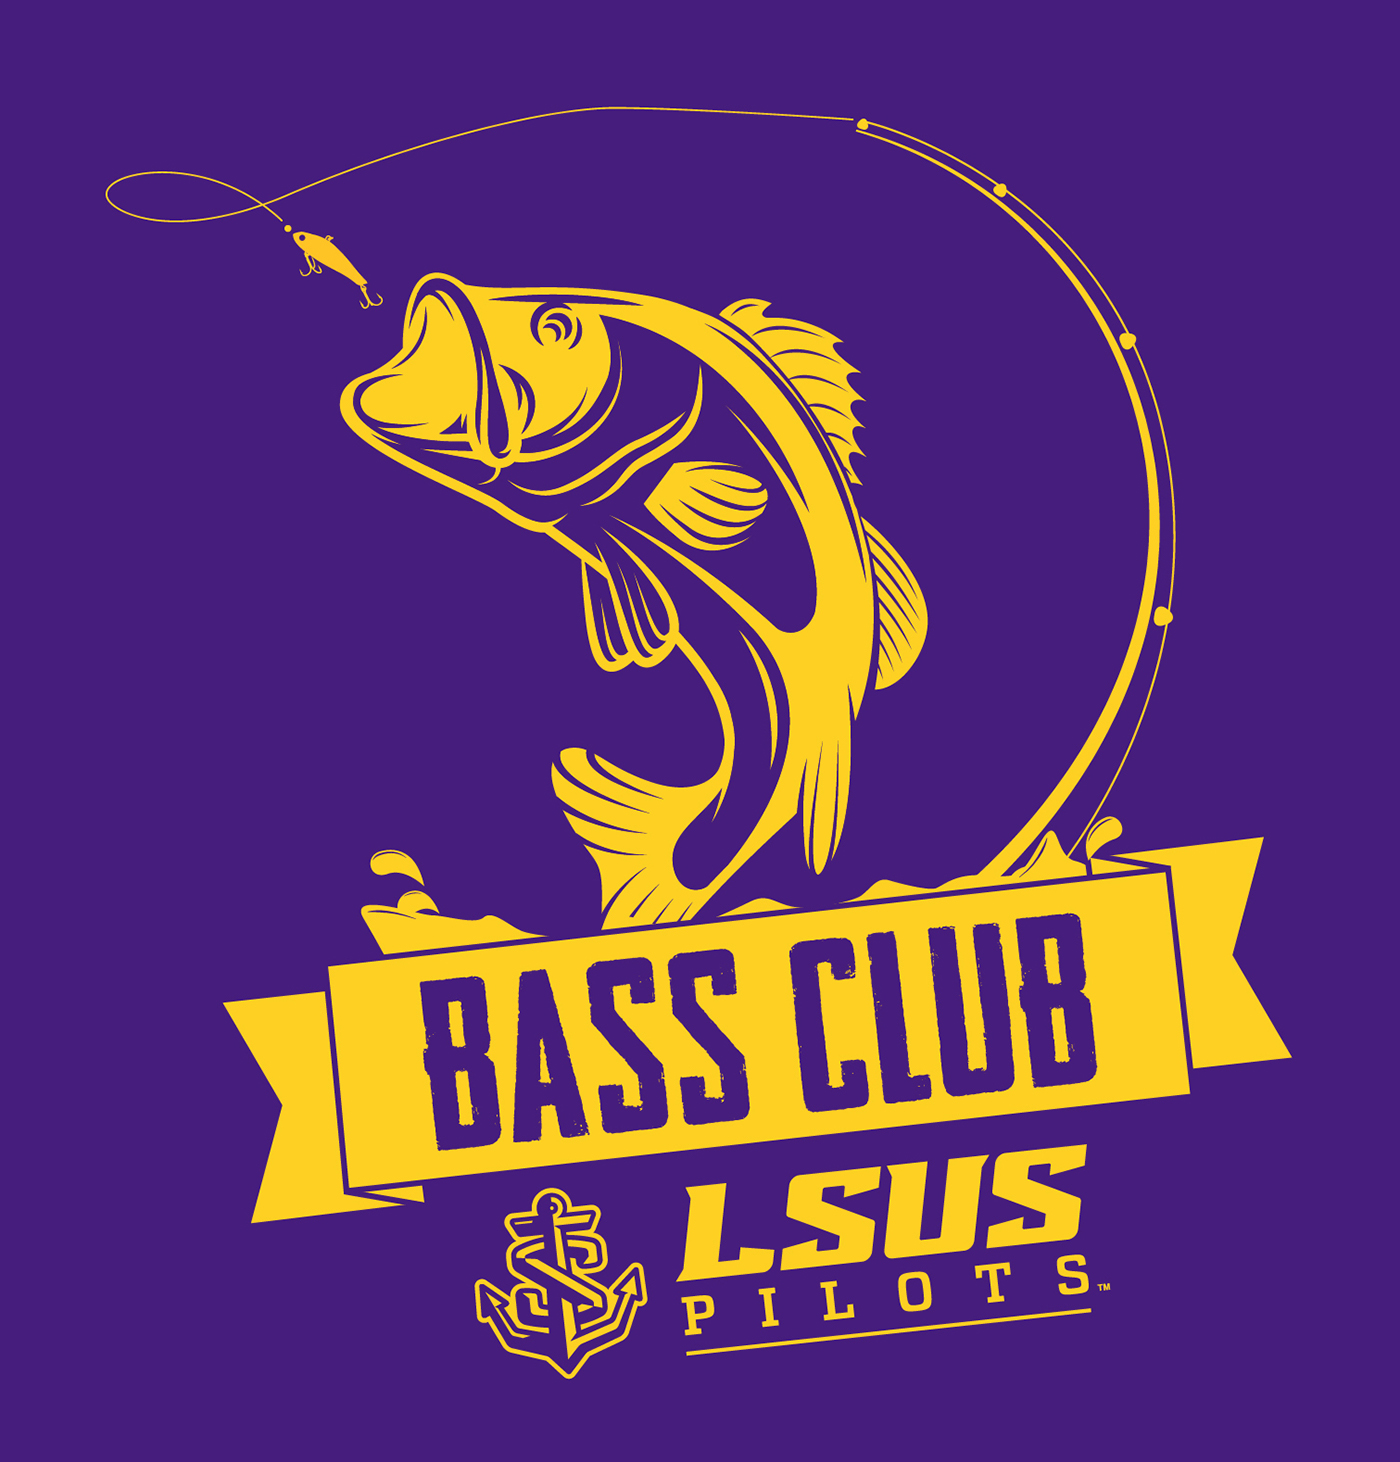 Bass club mix